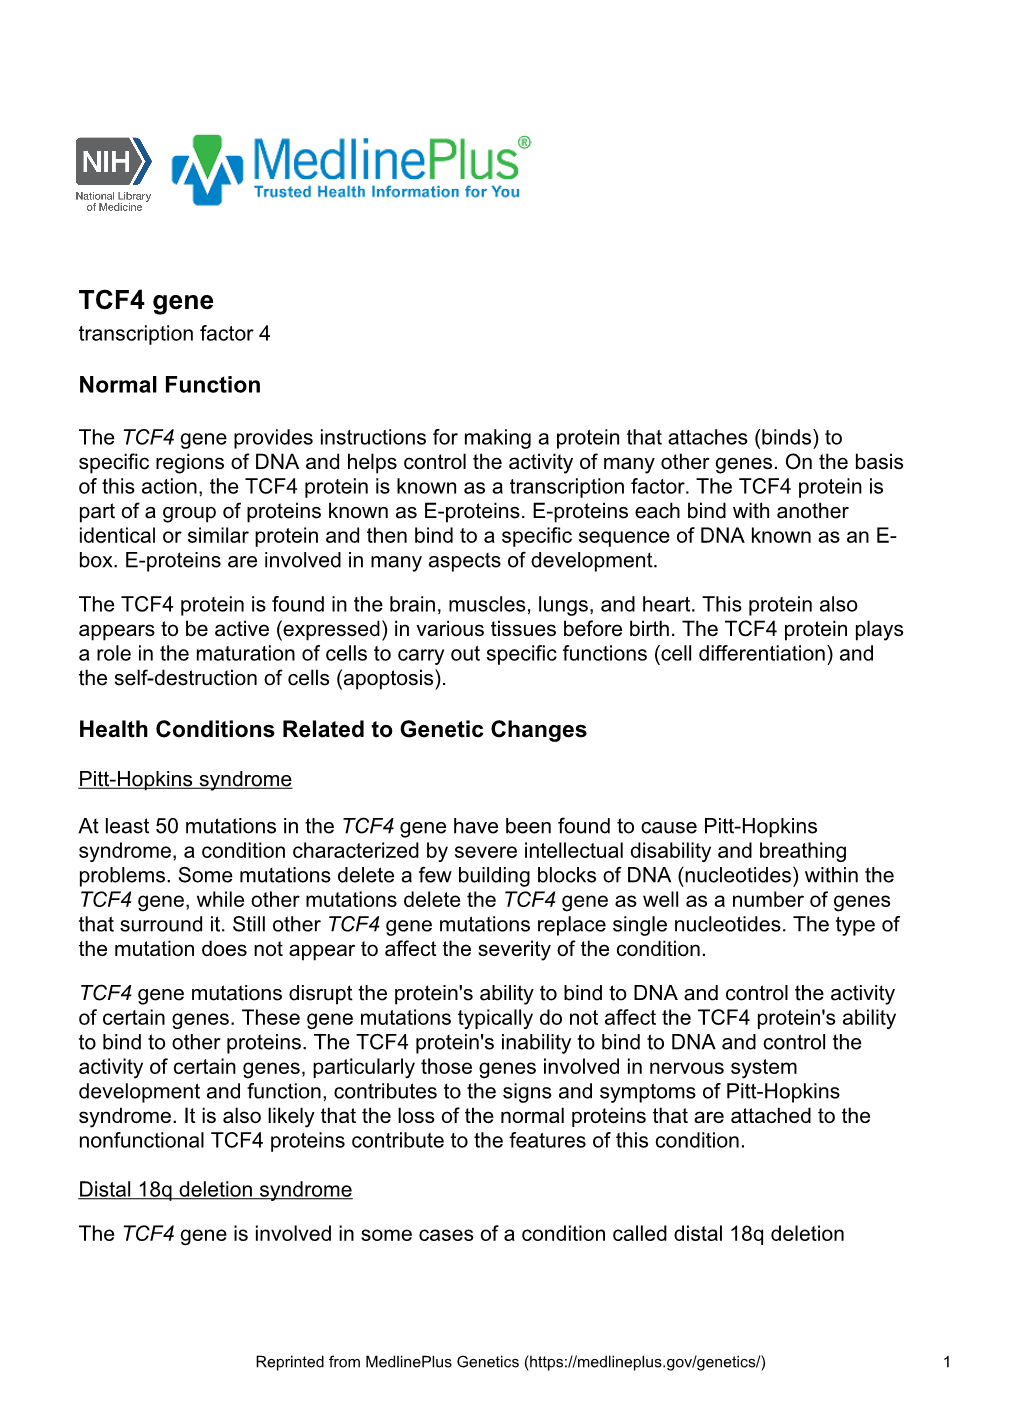 TCF4 Gene Transcription Factor 4